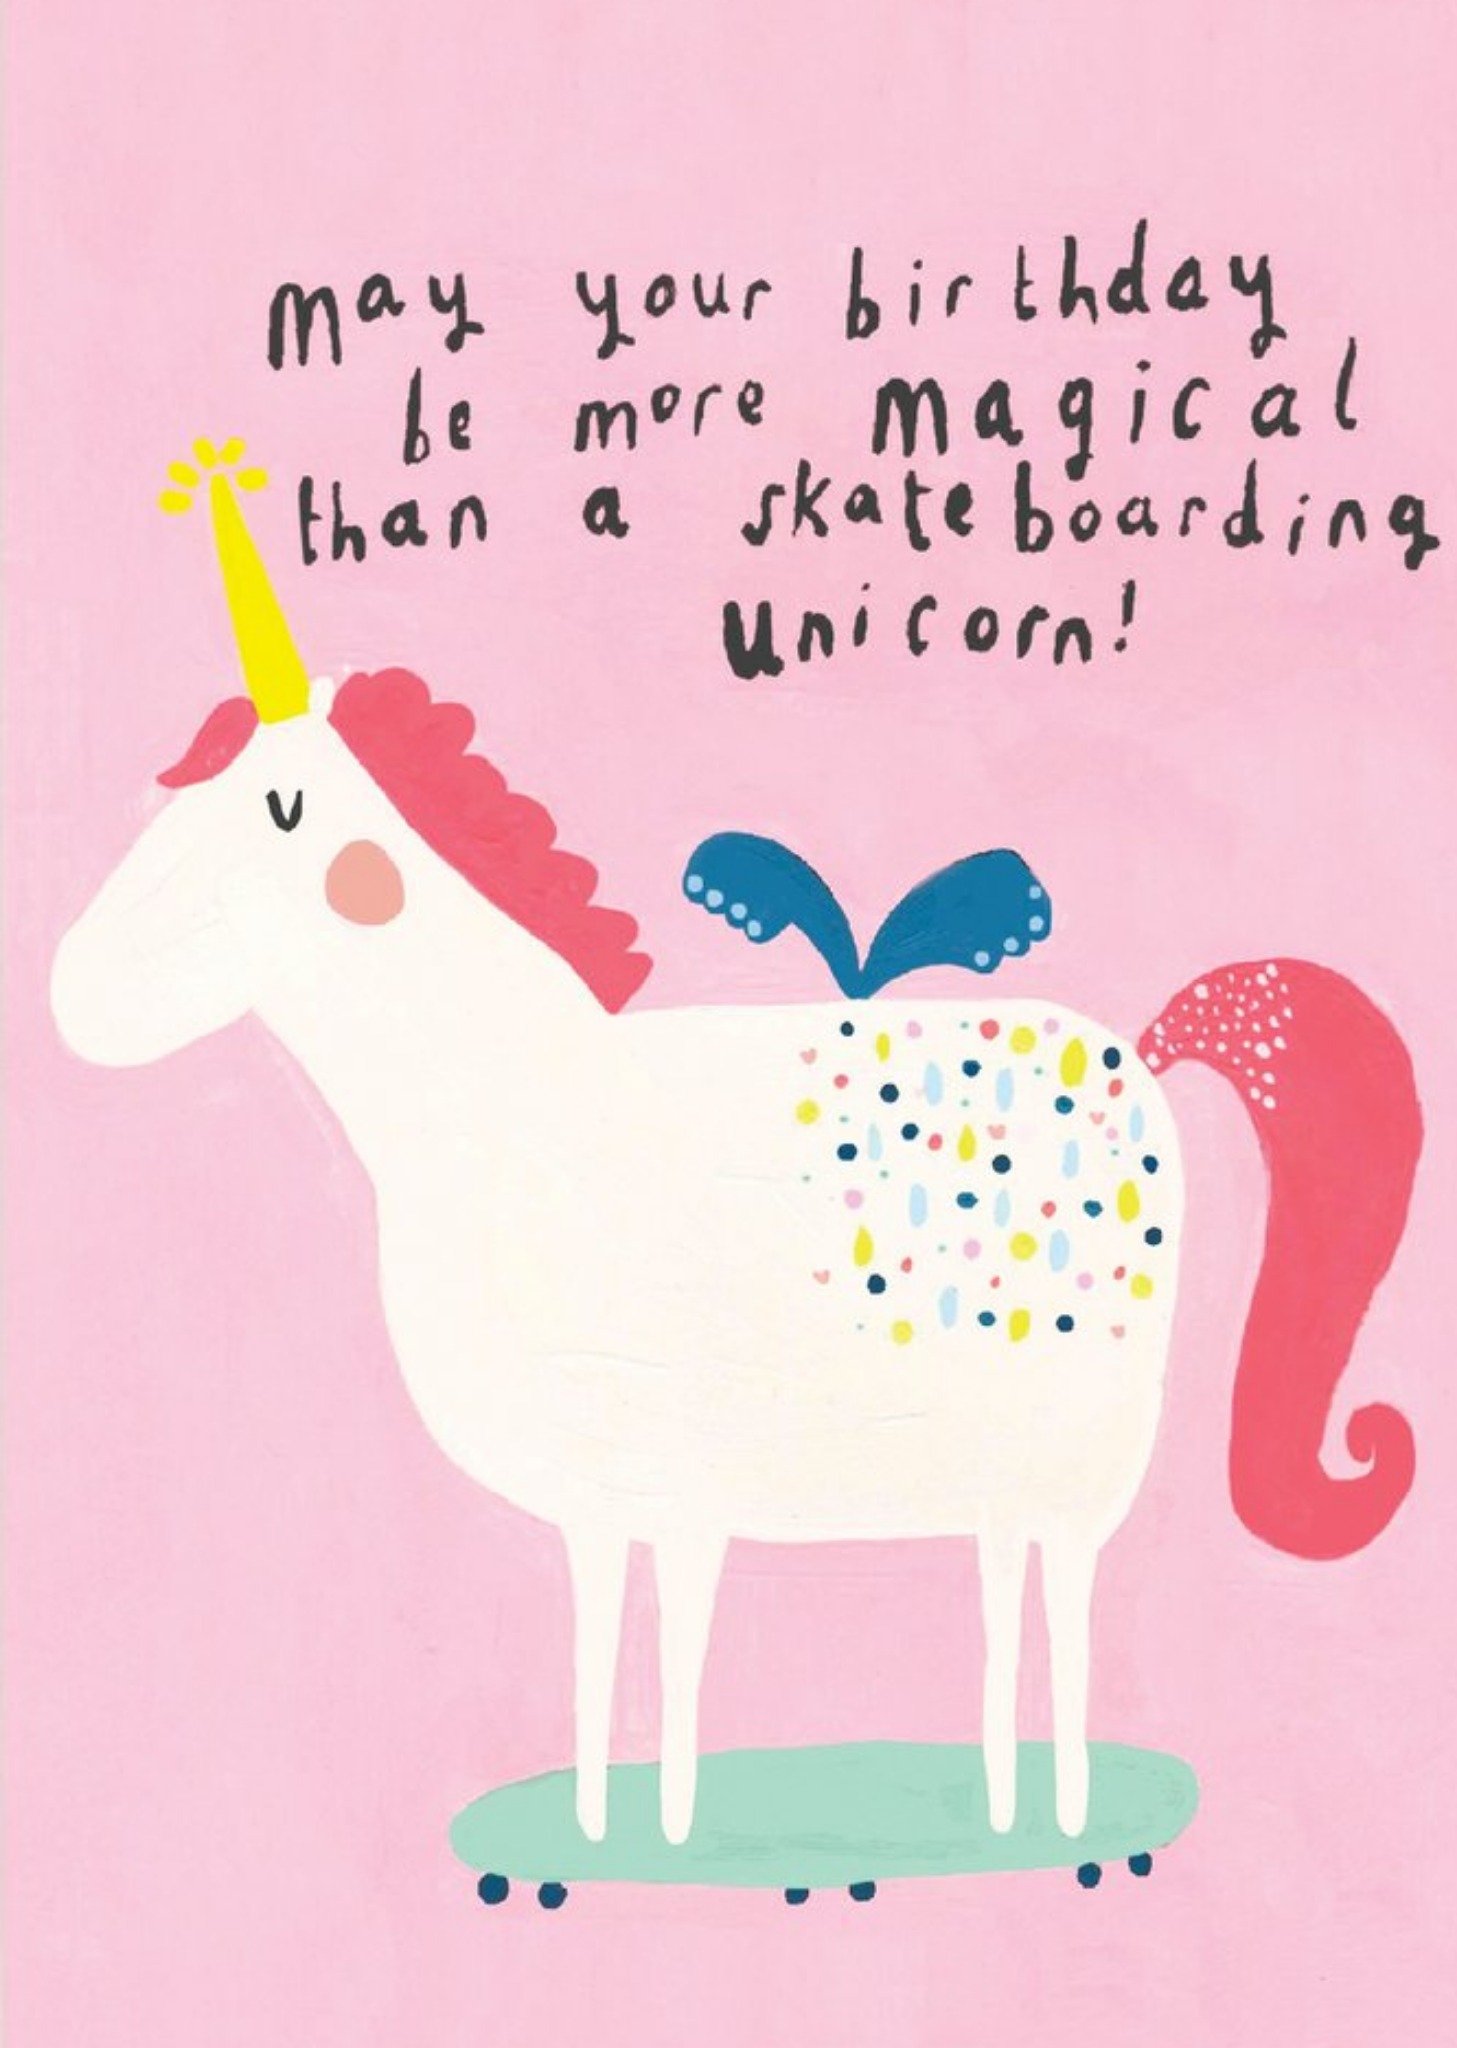 Sooshichacha Funny Magical Skateboarding Unicorn Birthday Card Ecard